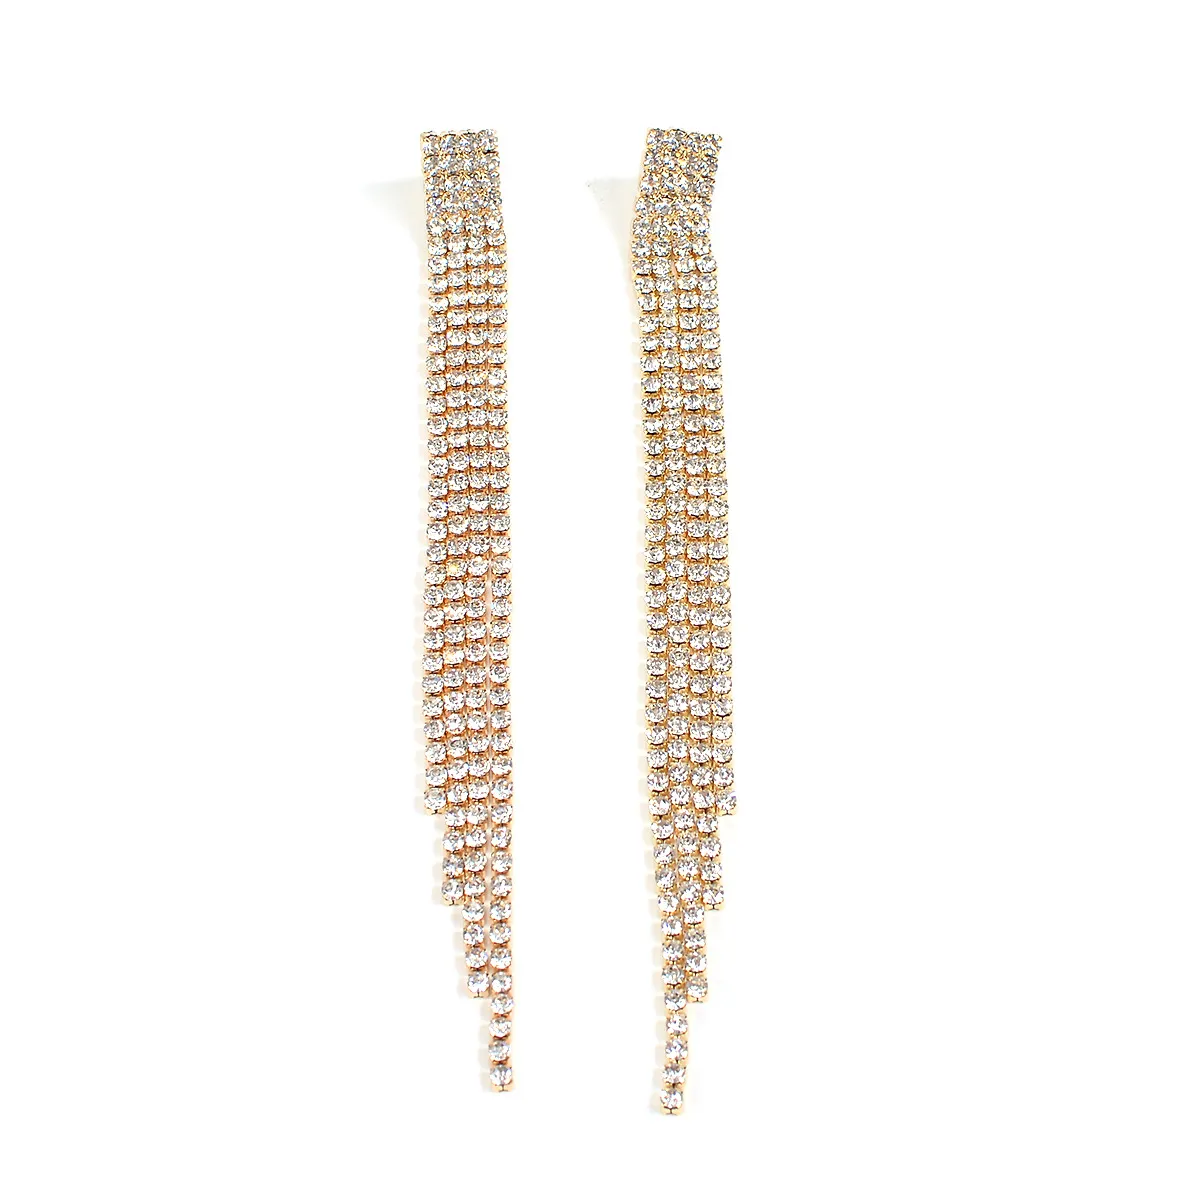 Brand Crystal Statement stud earrings for women fashion jewelry Rhinestone Tassel chains pendant earring Silver brincos